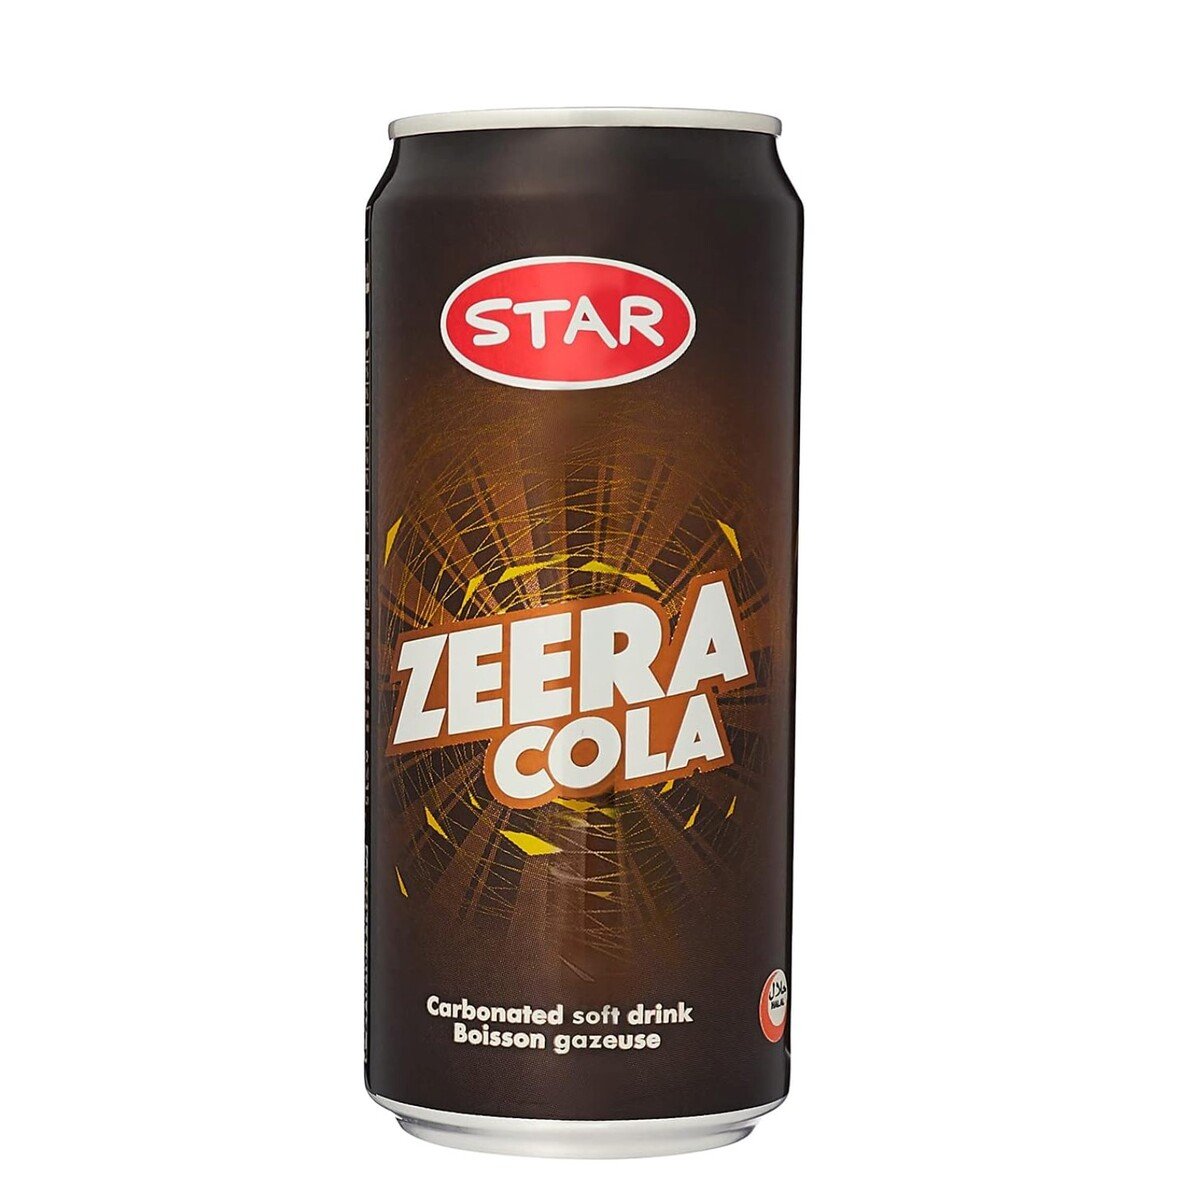 Star Zeera Cola Carbonated Soft Drink 6 x 300 ml